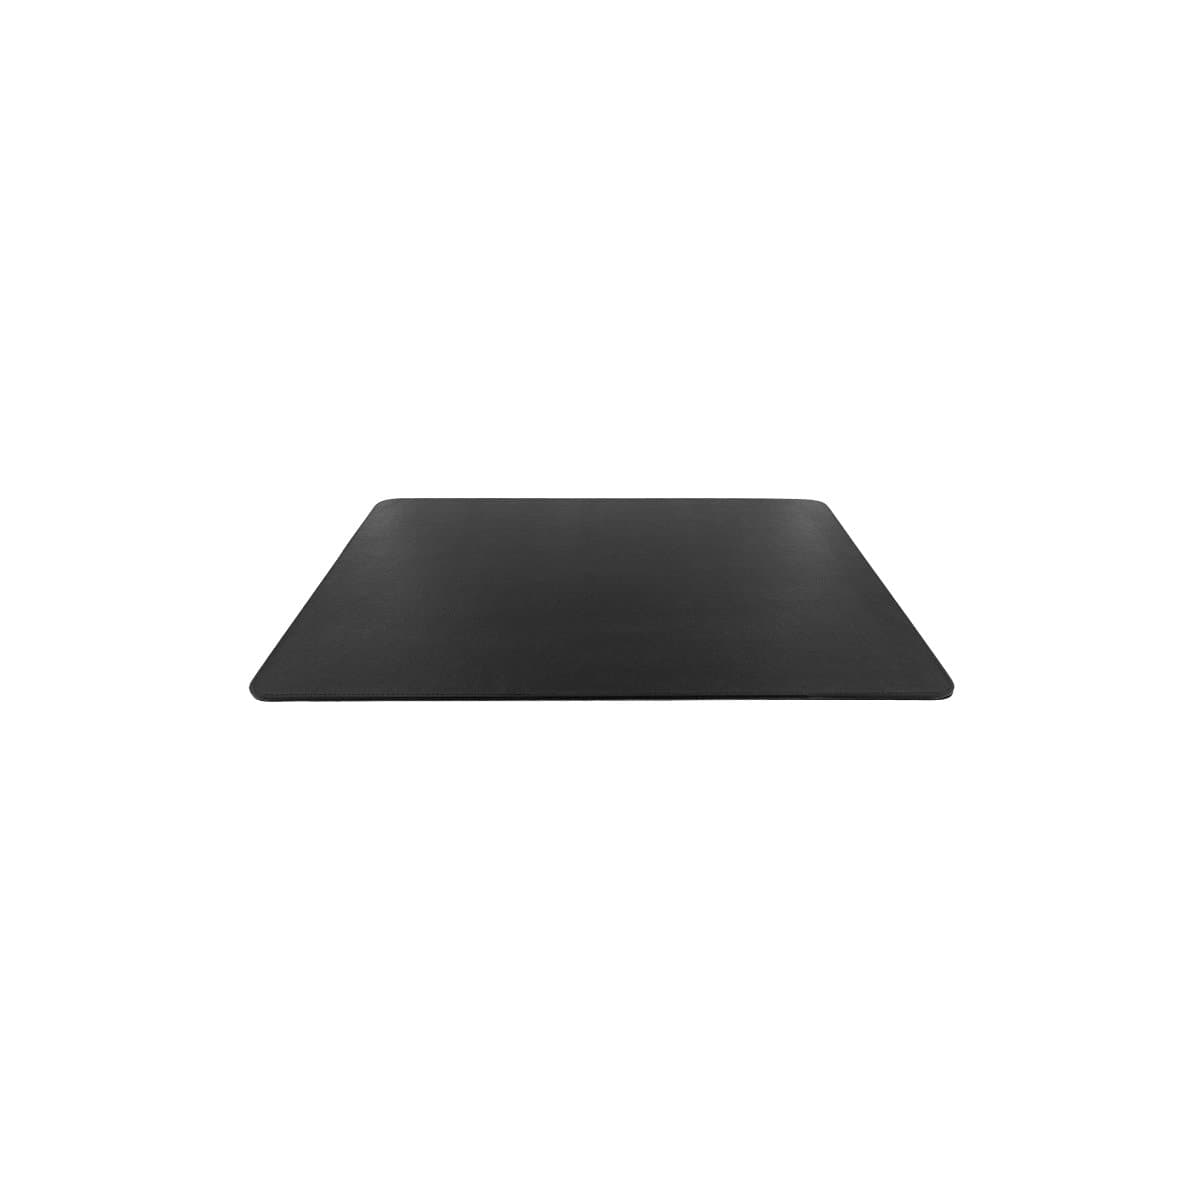 Konrad S. Mouse Pad, 25 x 20cm, PU Leather, Black